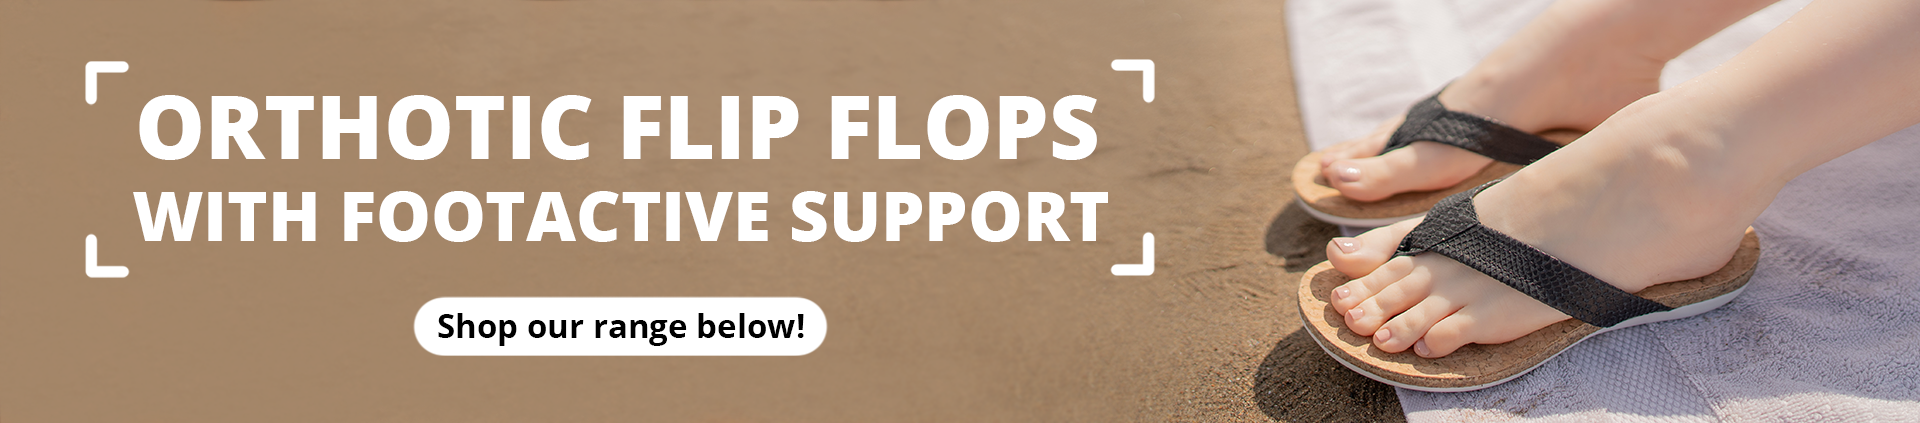 Orthotic Flip Flops